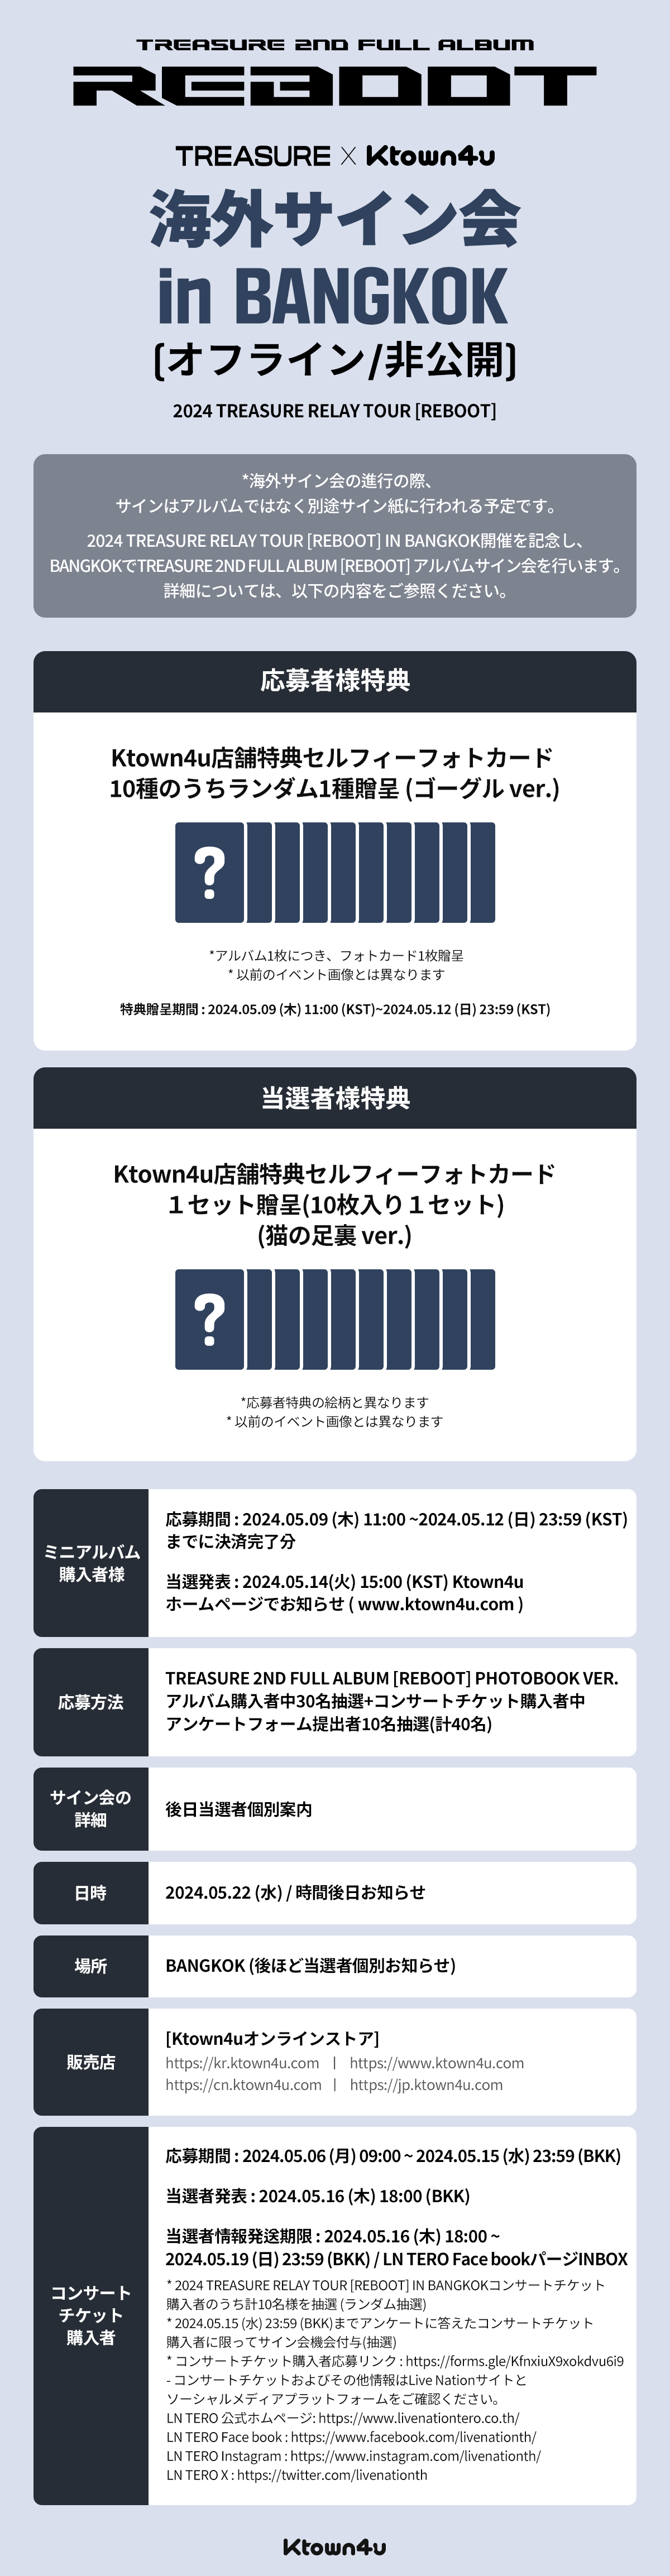 jp.ktown4u.com : event detail_TeumesJapan